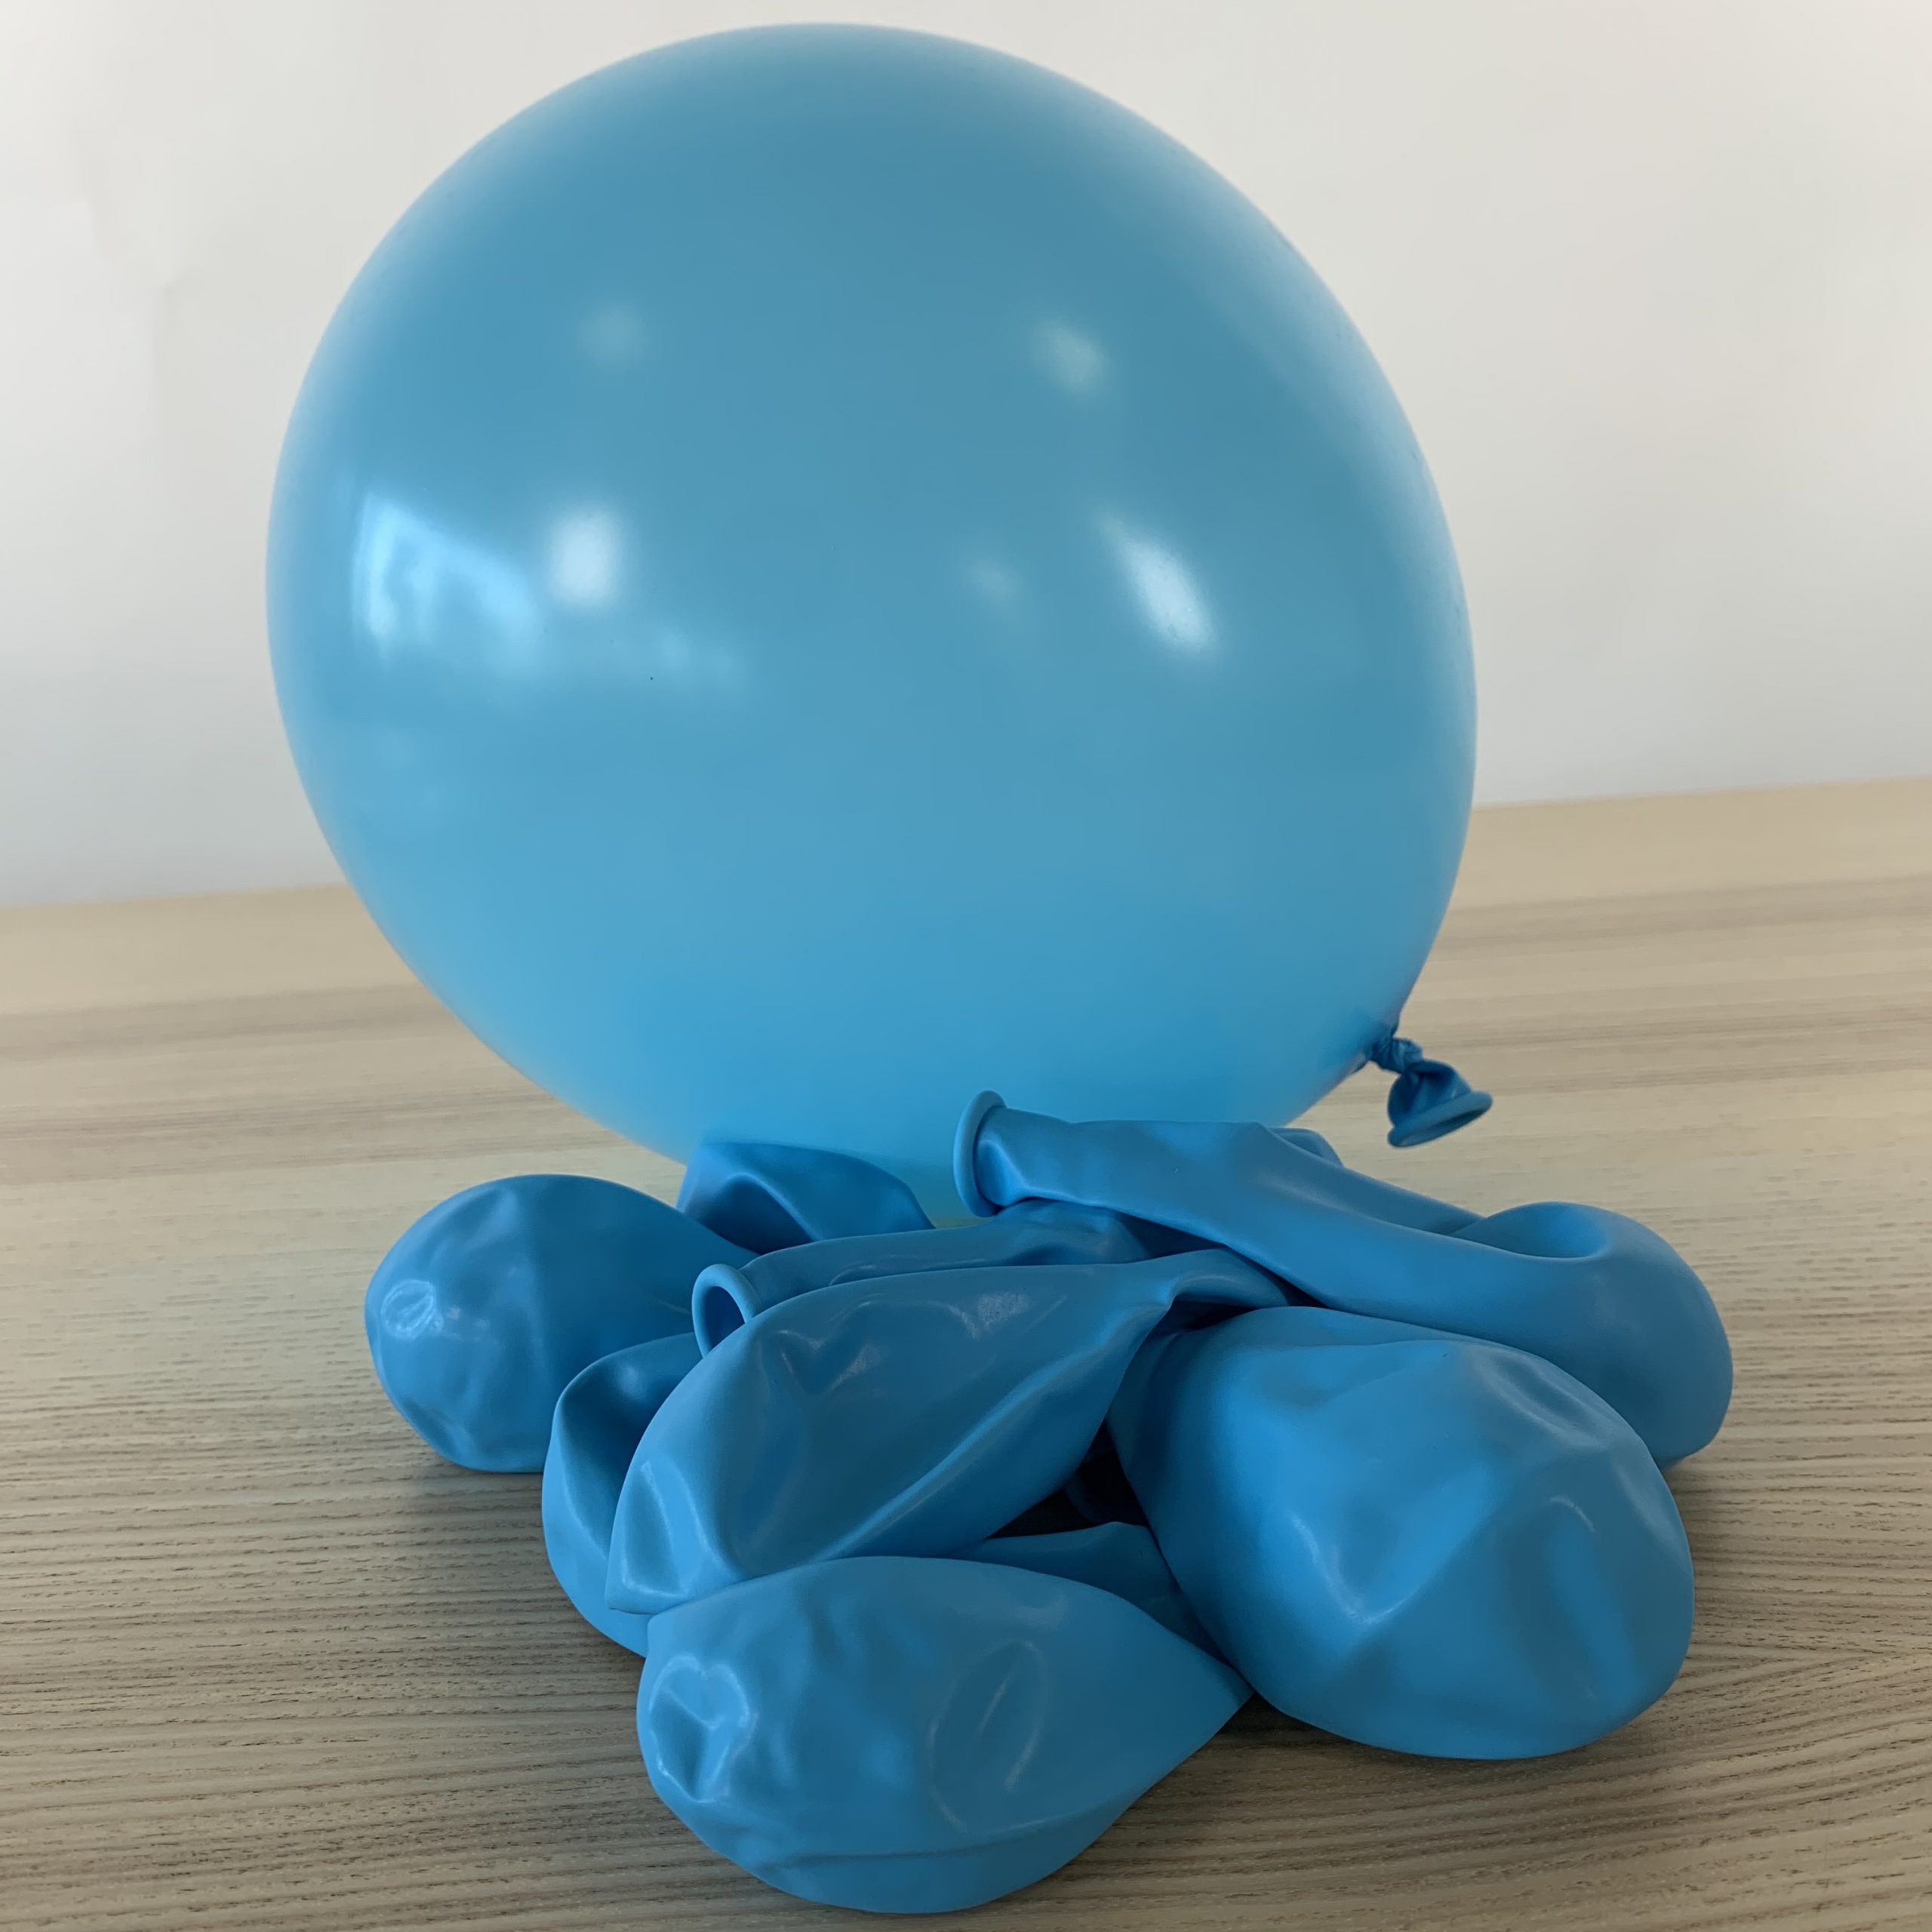 https://www.festivitre.com/wp-content/uploads/2022/03/festivitre-ballons-30cm-bleu-ciel-gonfles-scaled-1.jpg